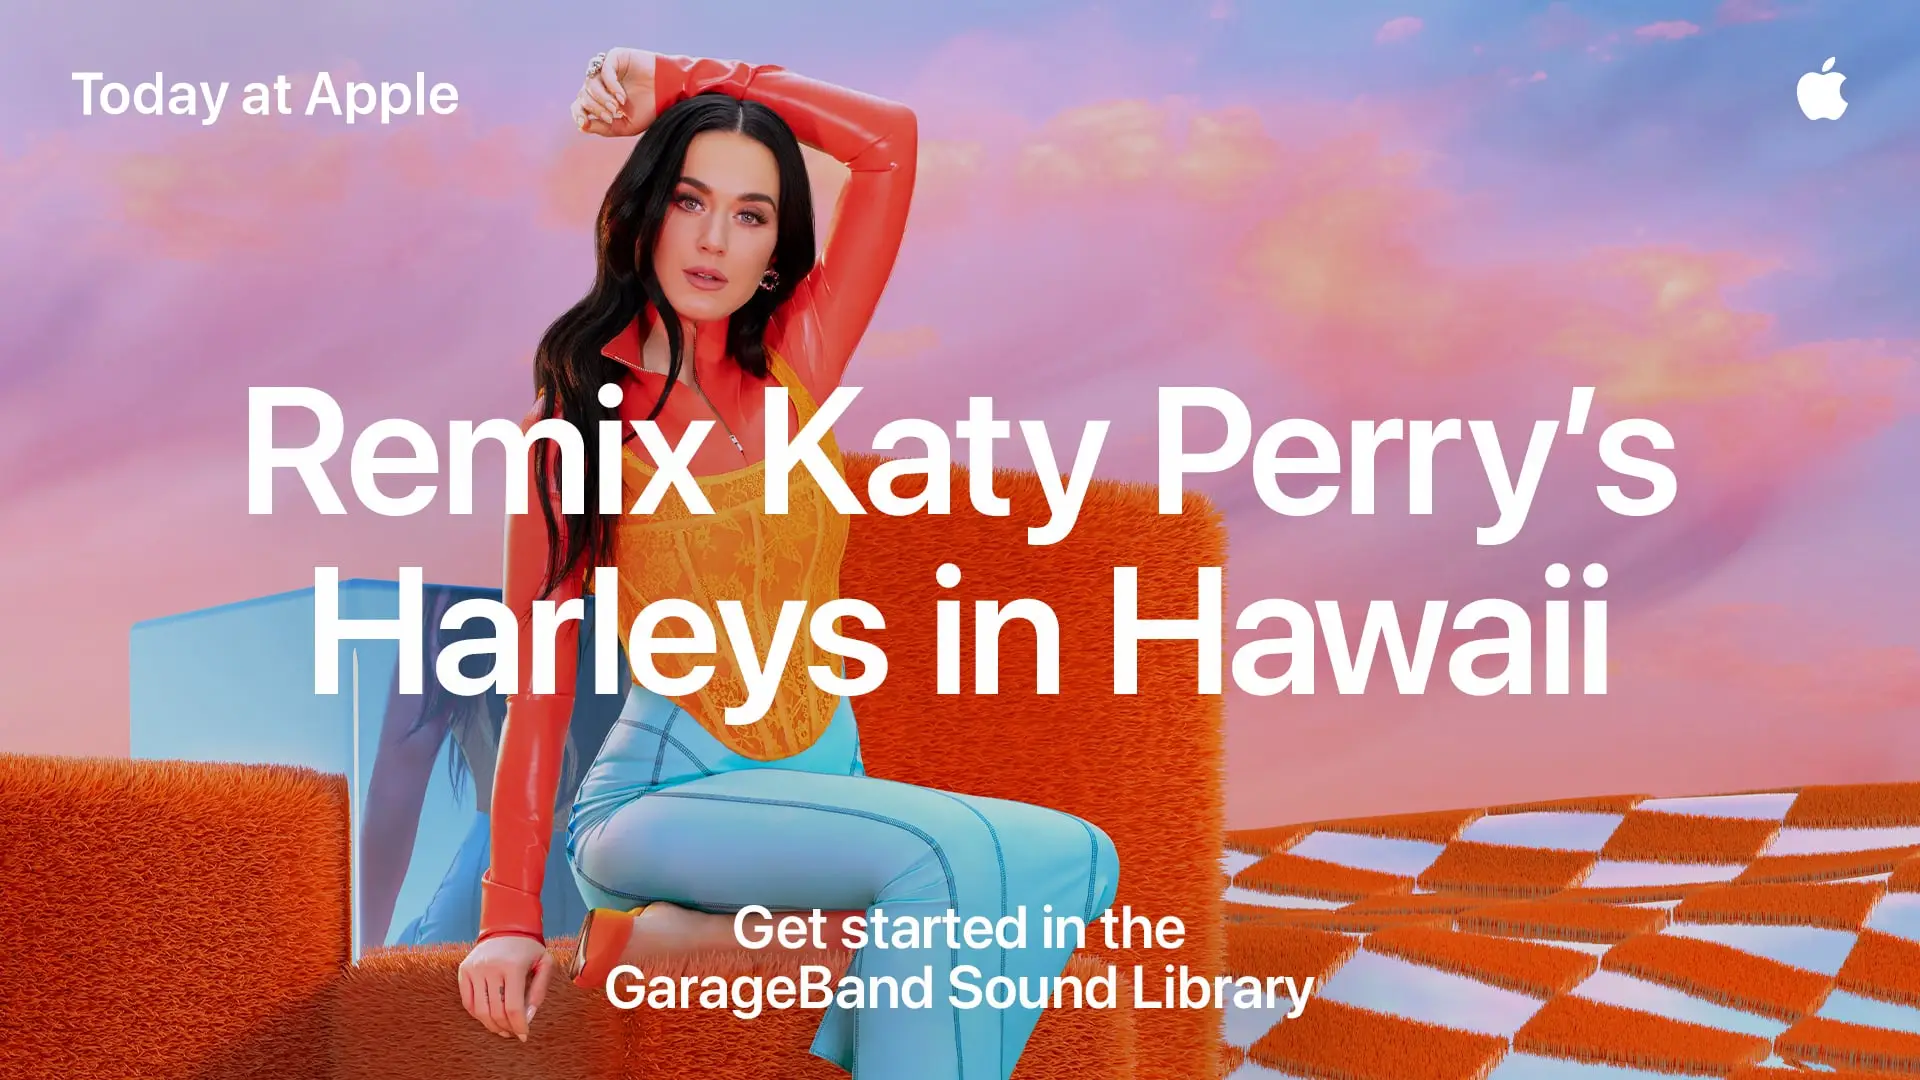 Apple Store ชวนคนรักดนตรี มารีมิกซ์เพลงใหม่ของ Katy Perry